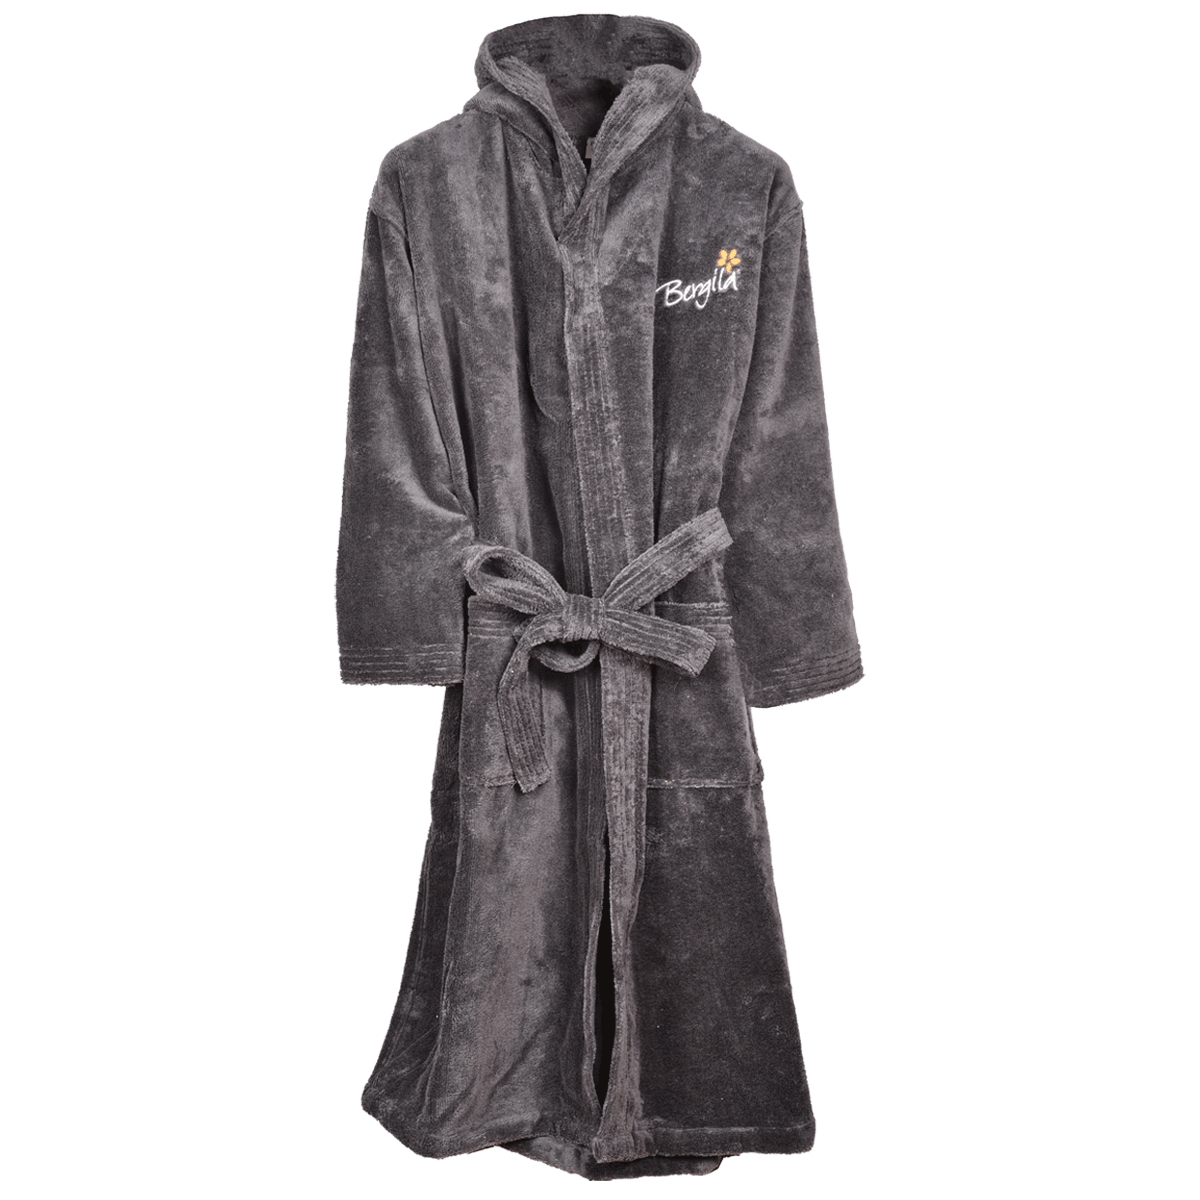 Anthracite bathrobe - size M